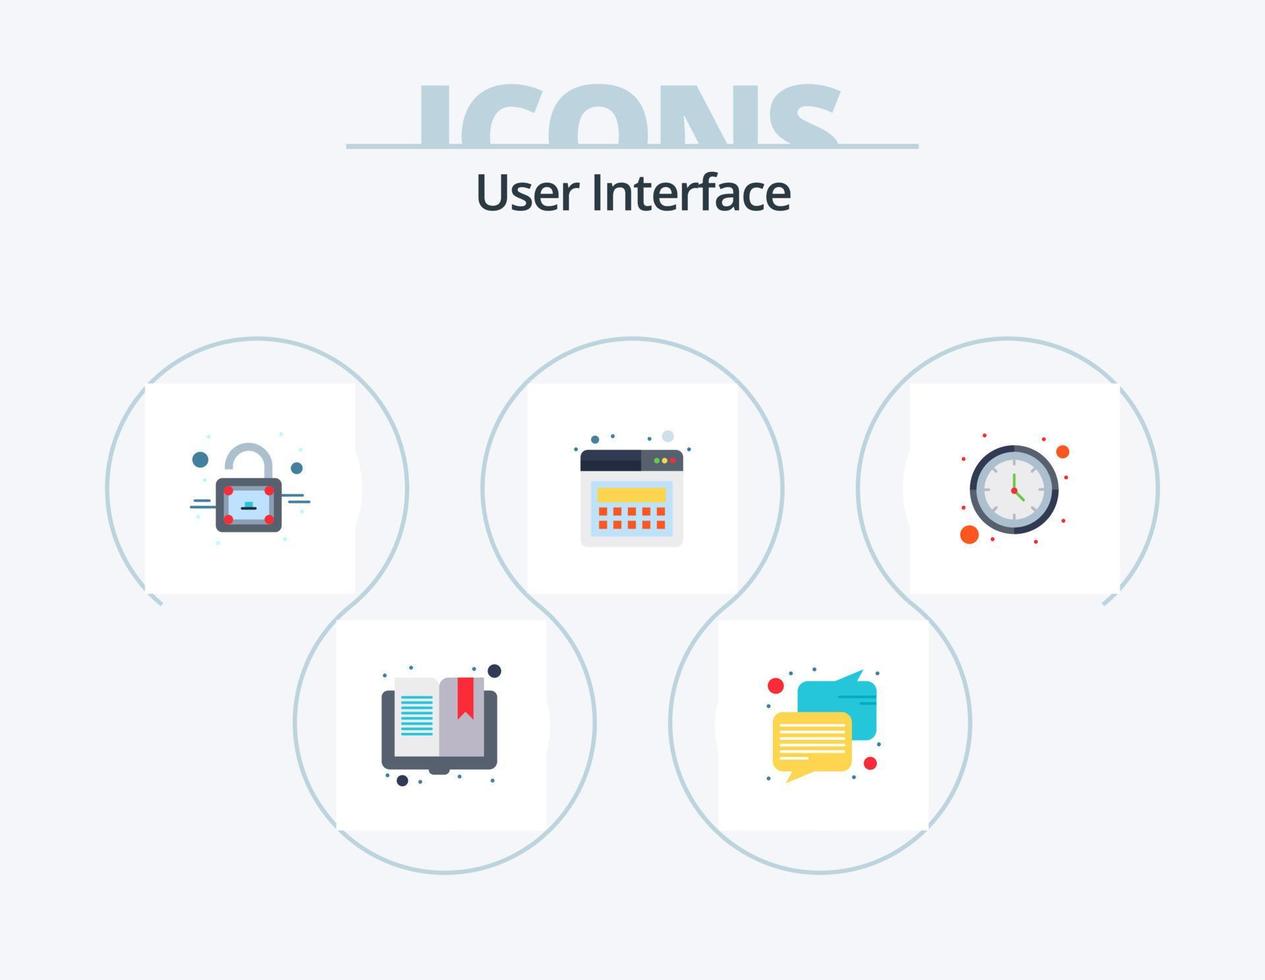 interfaz de usuario paquete de iconos planos 5 diseño de iconos. . reloj de pared. candado. Temporizador. web vector